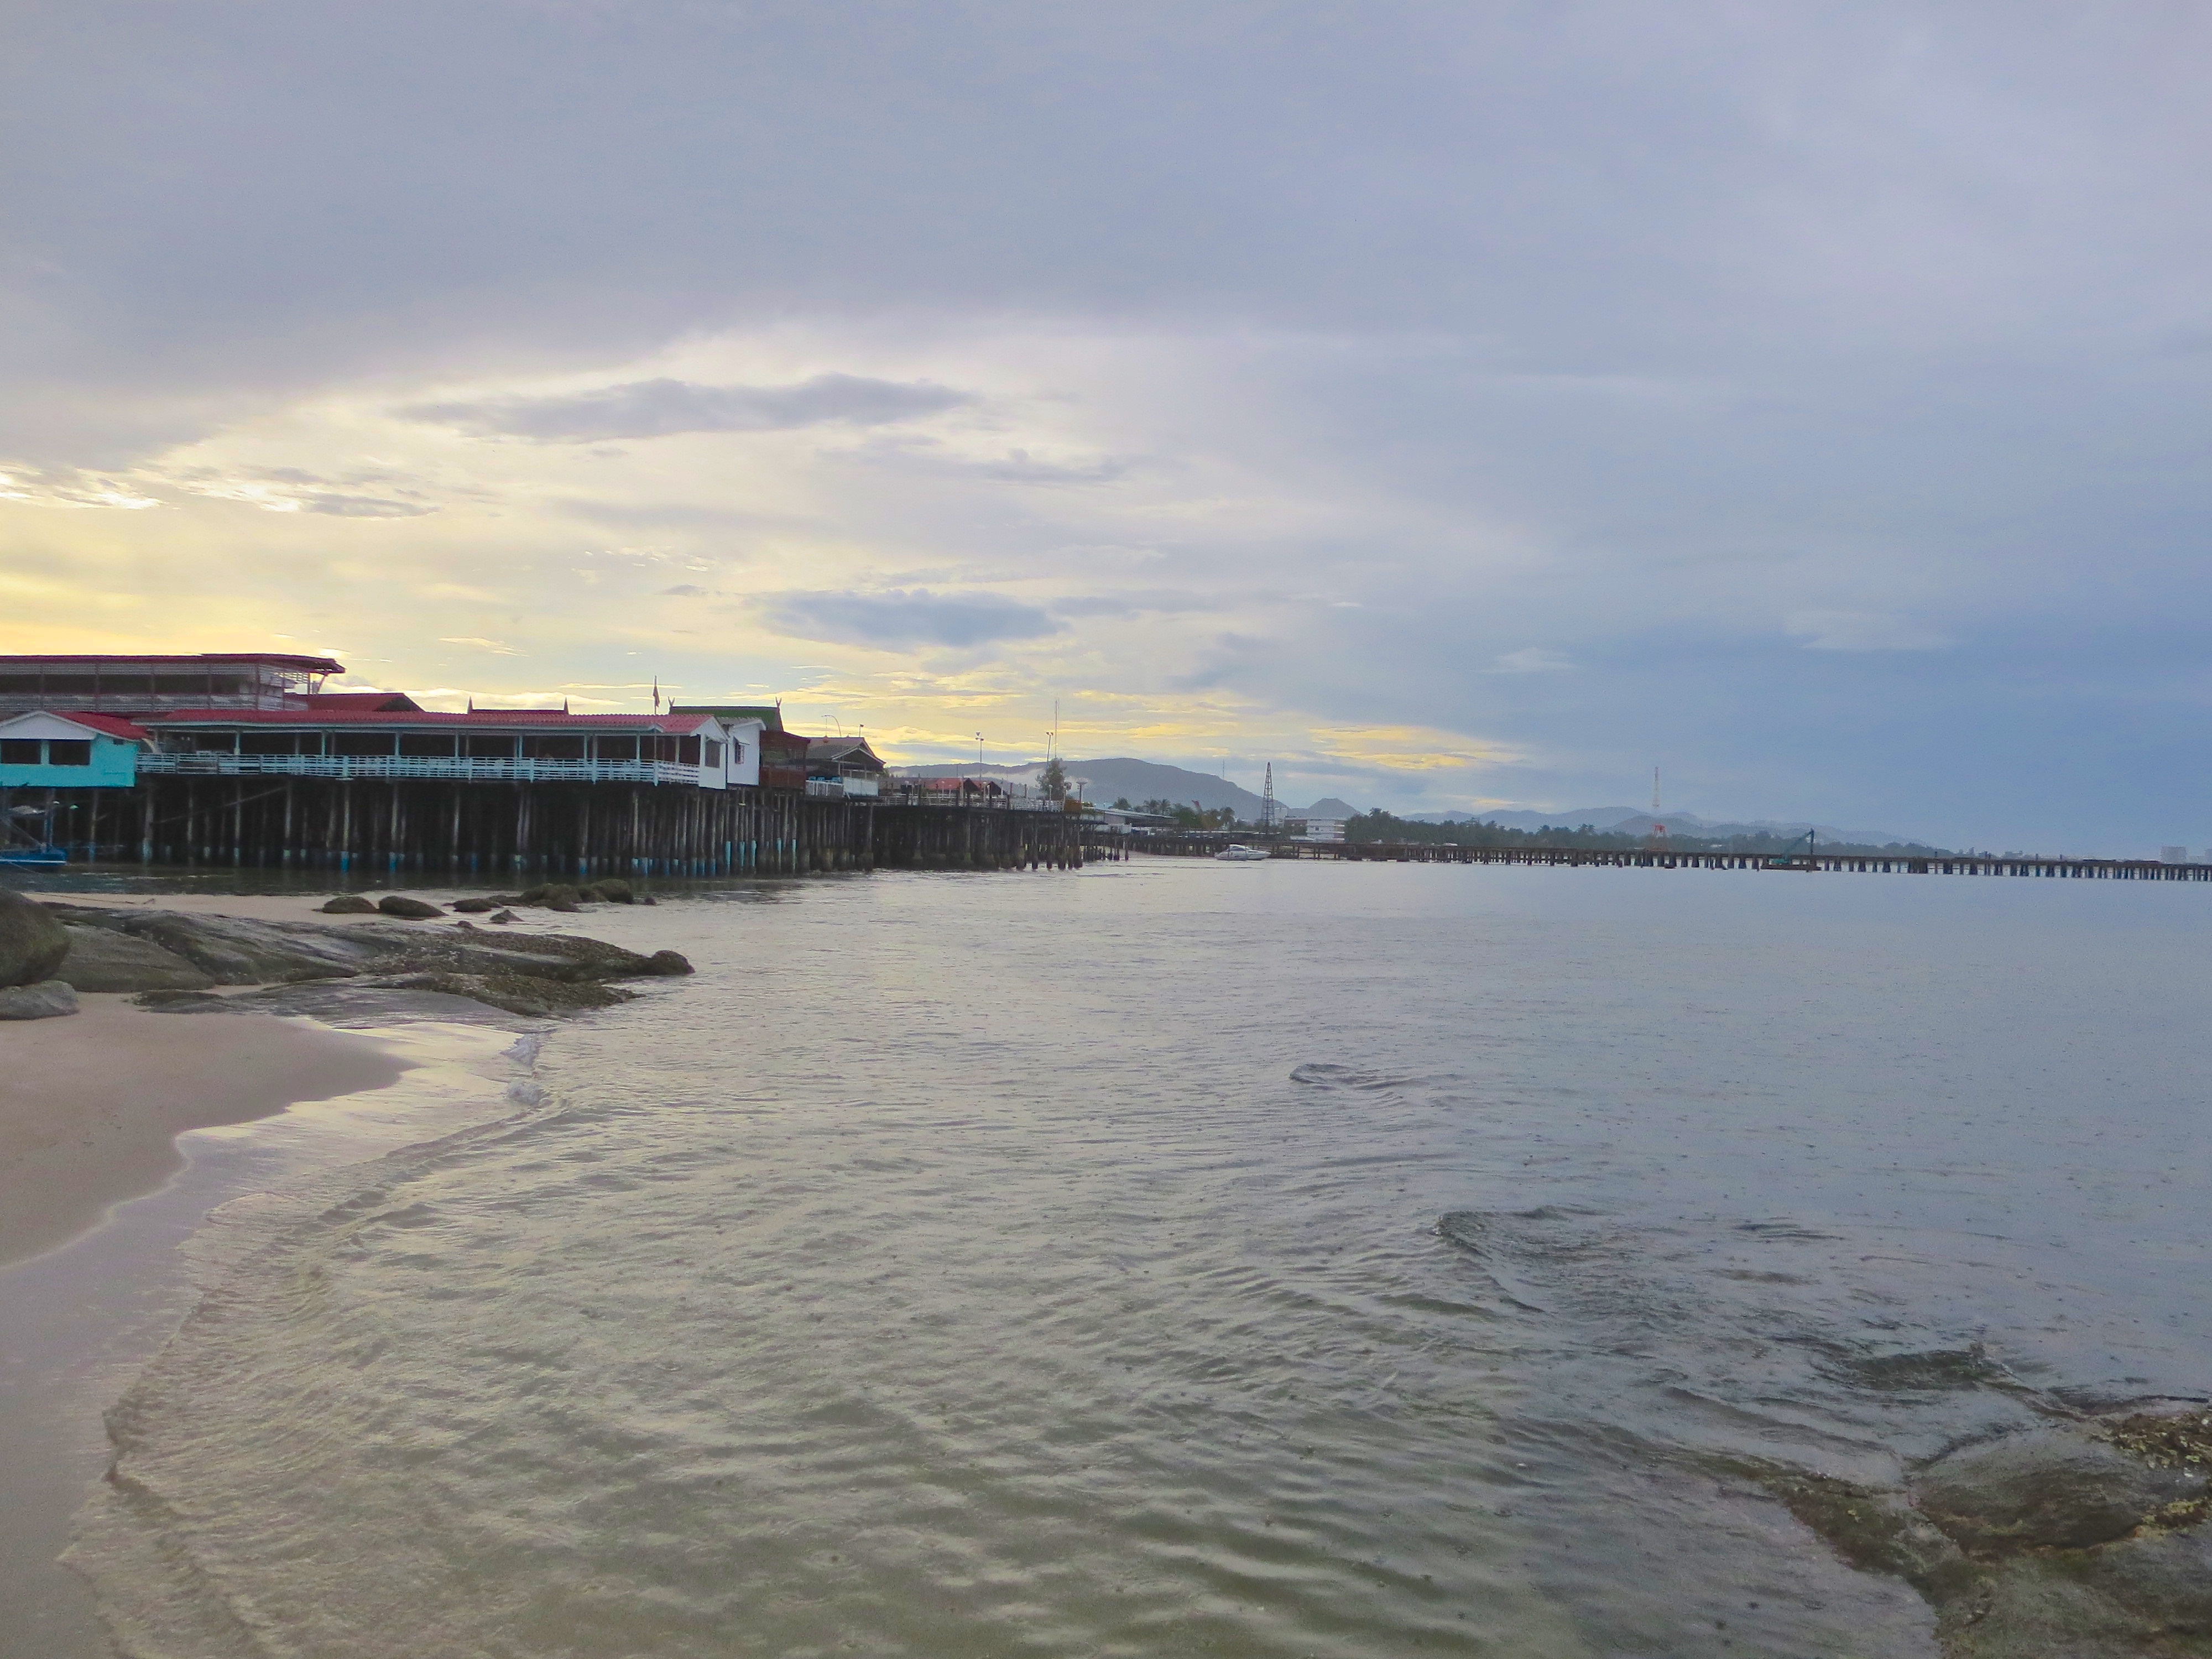 File:Huahin, Waterfront - panoramio.jpg - Wikimedia Commons